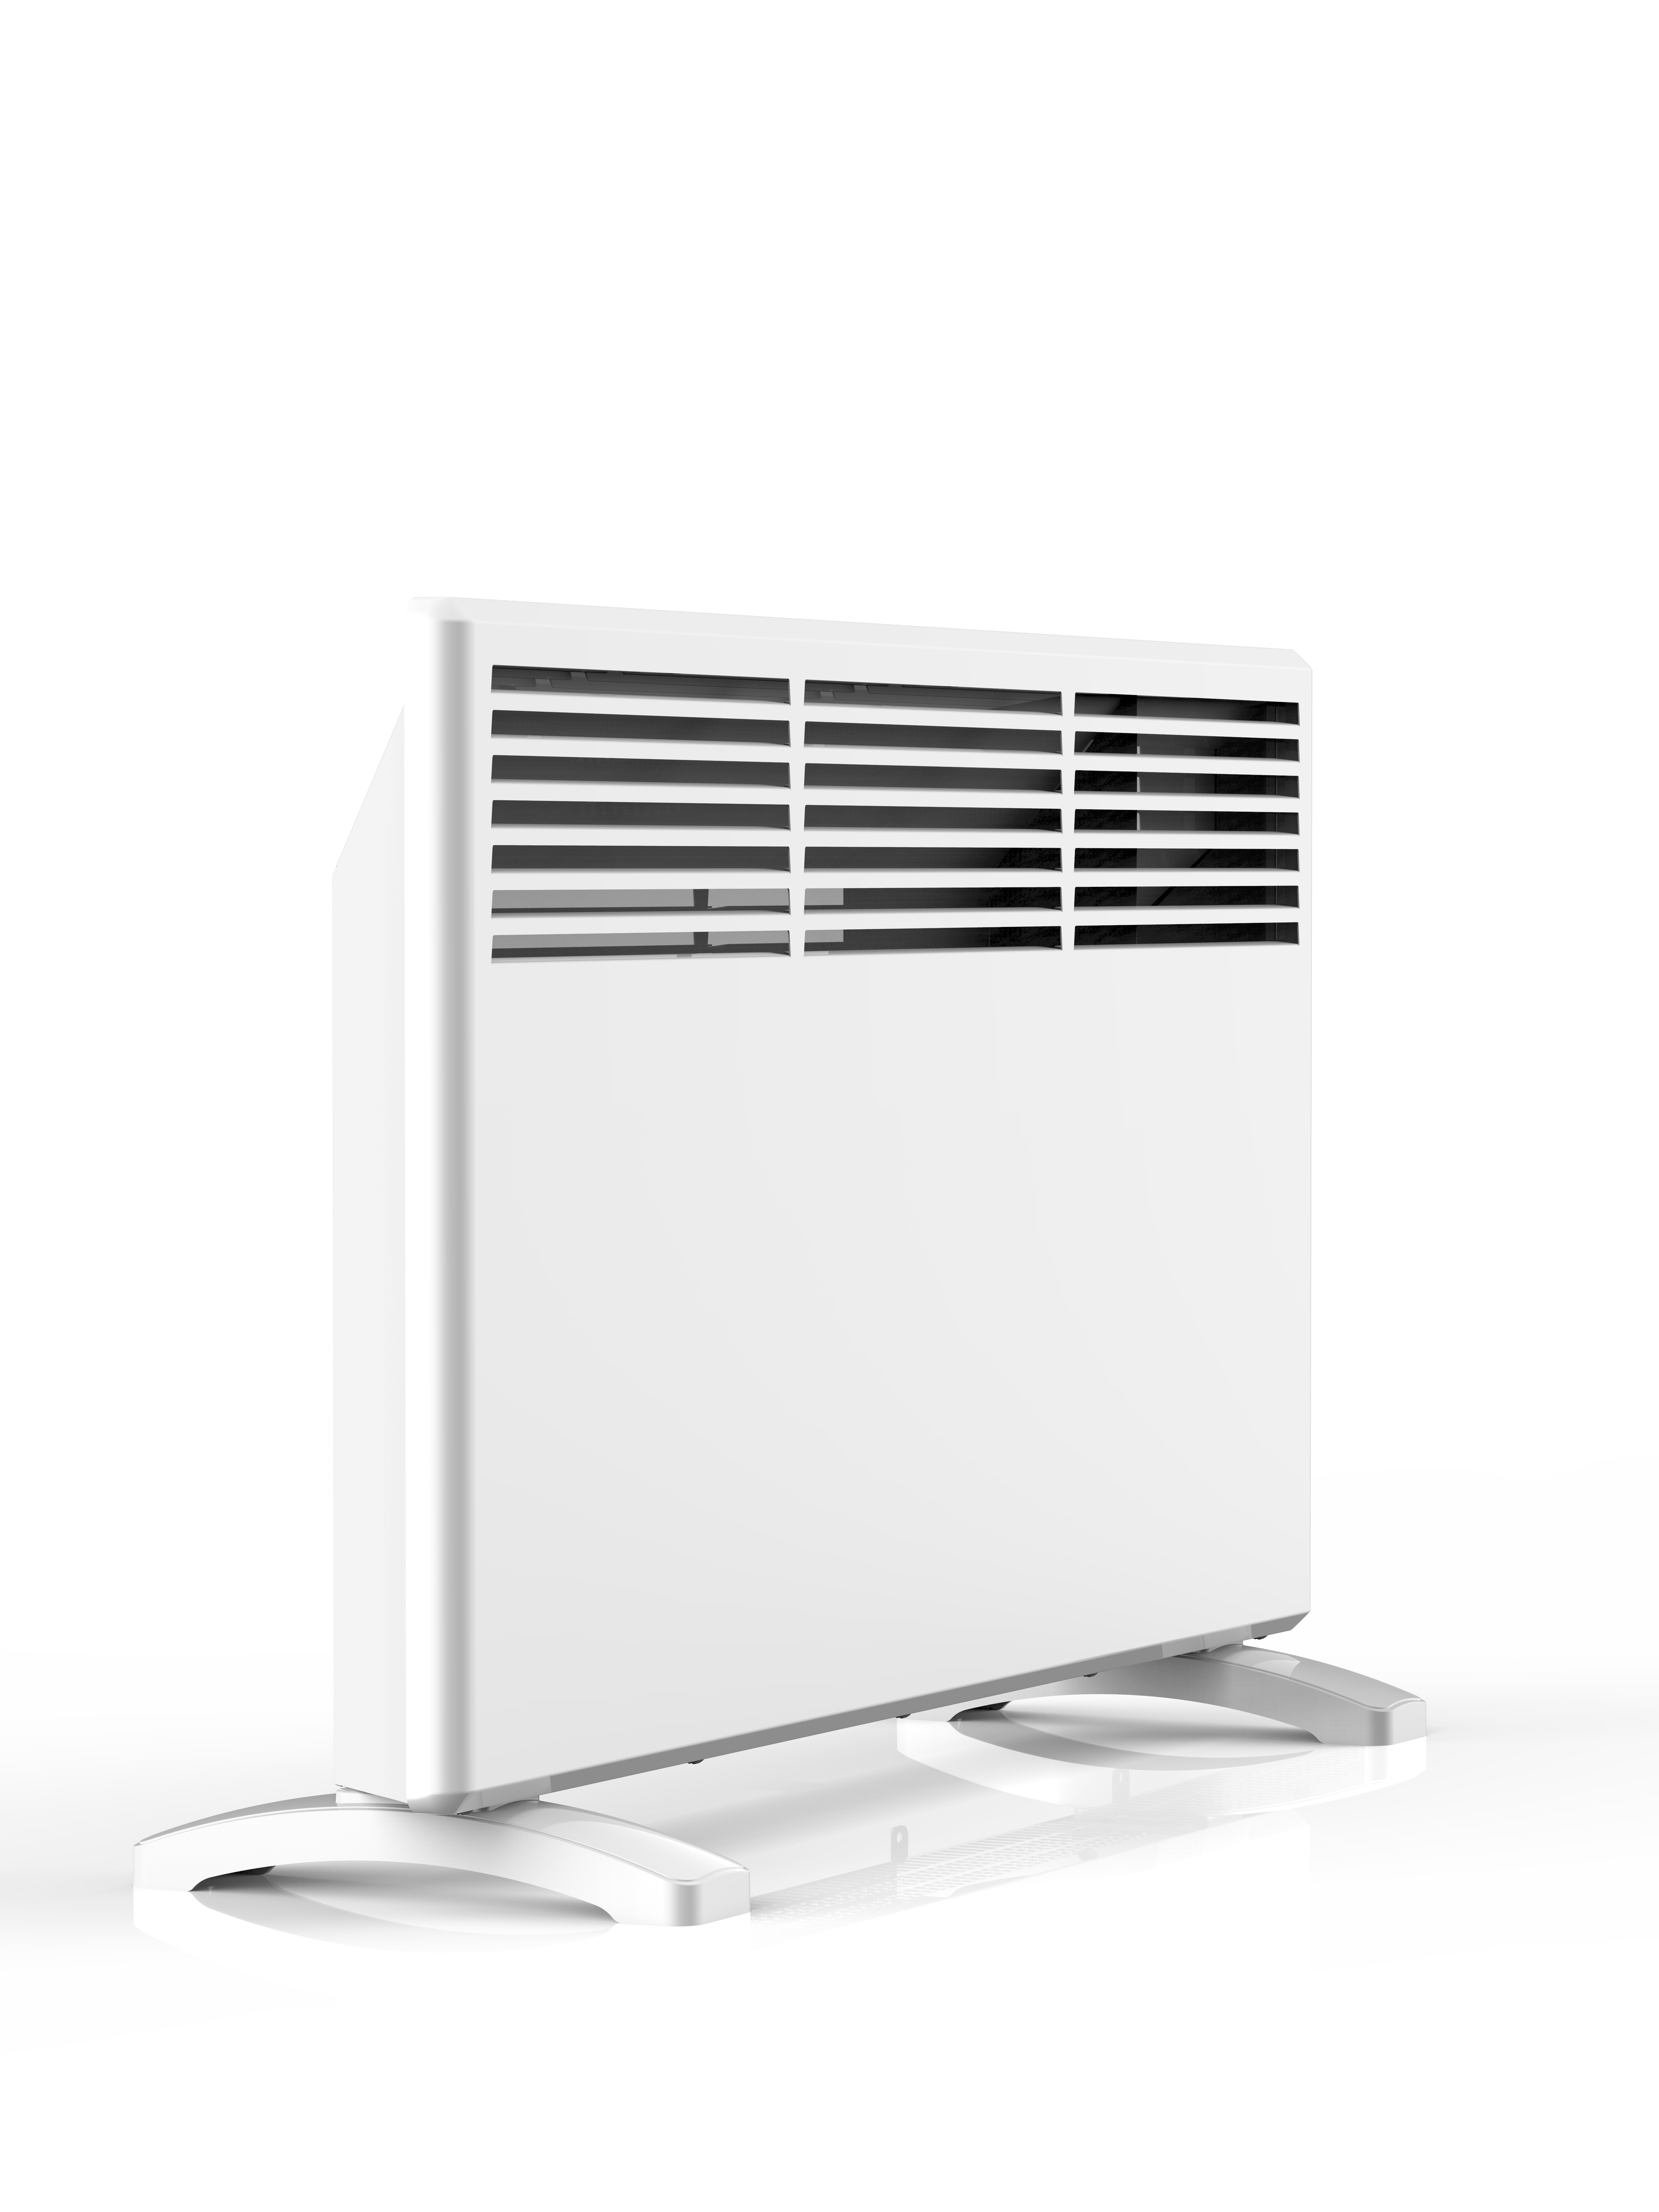 panel heater